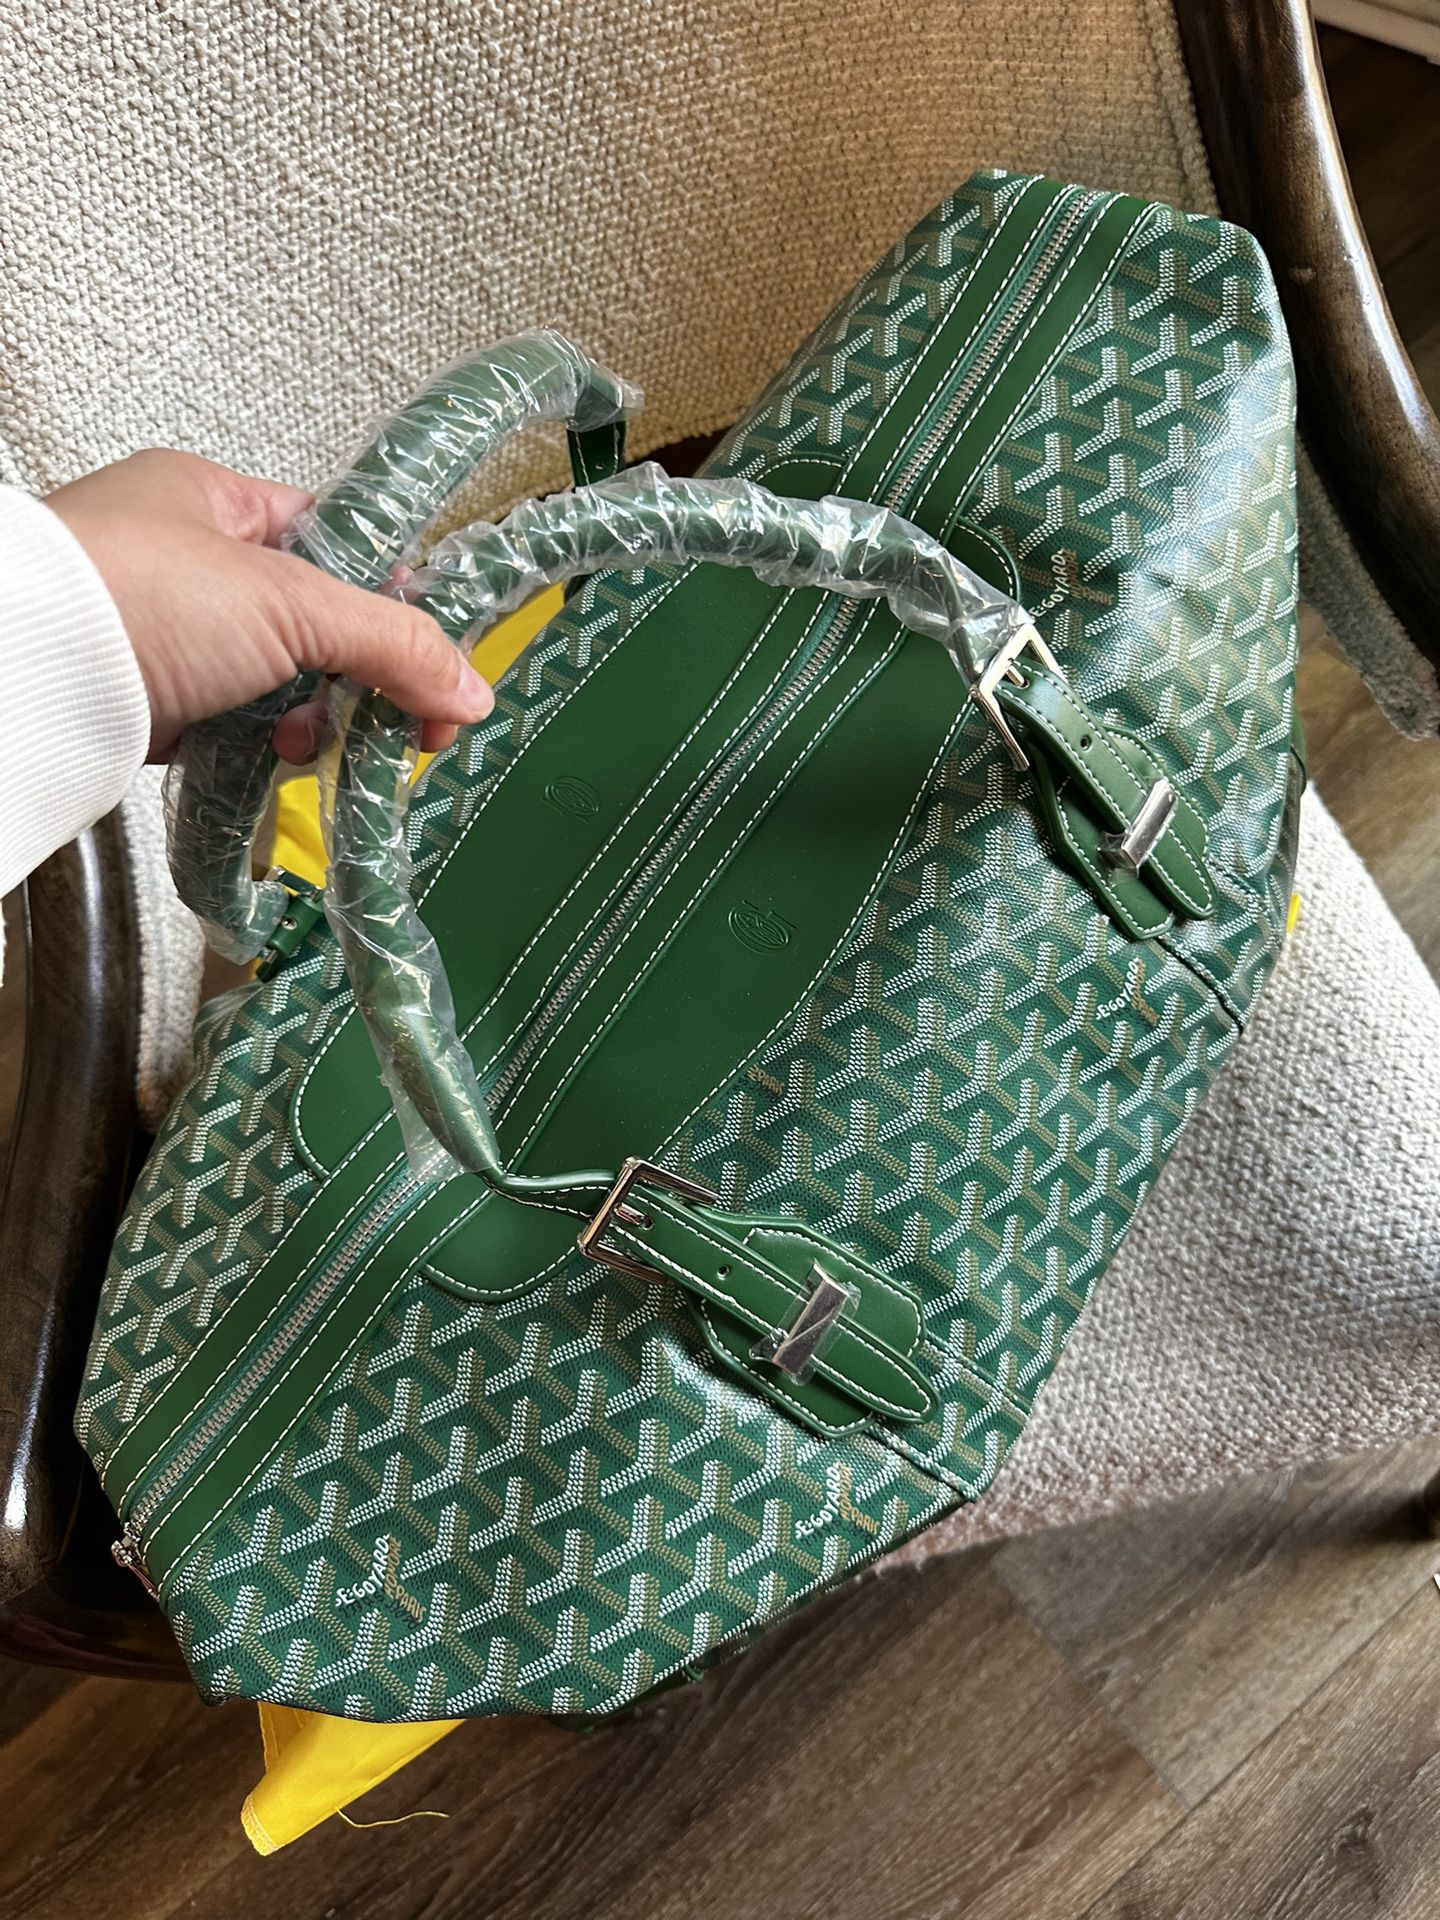 Goyard travel bag for Sale in Seal Beach, CA - OfferUp